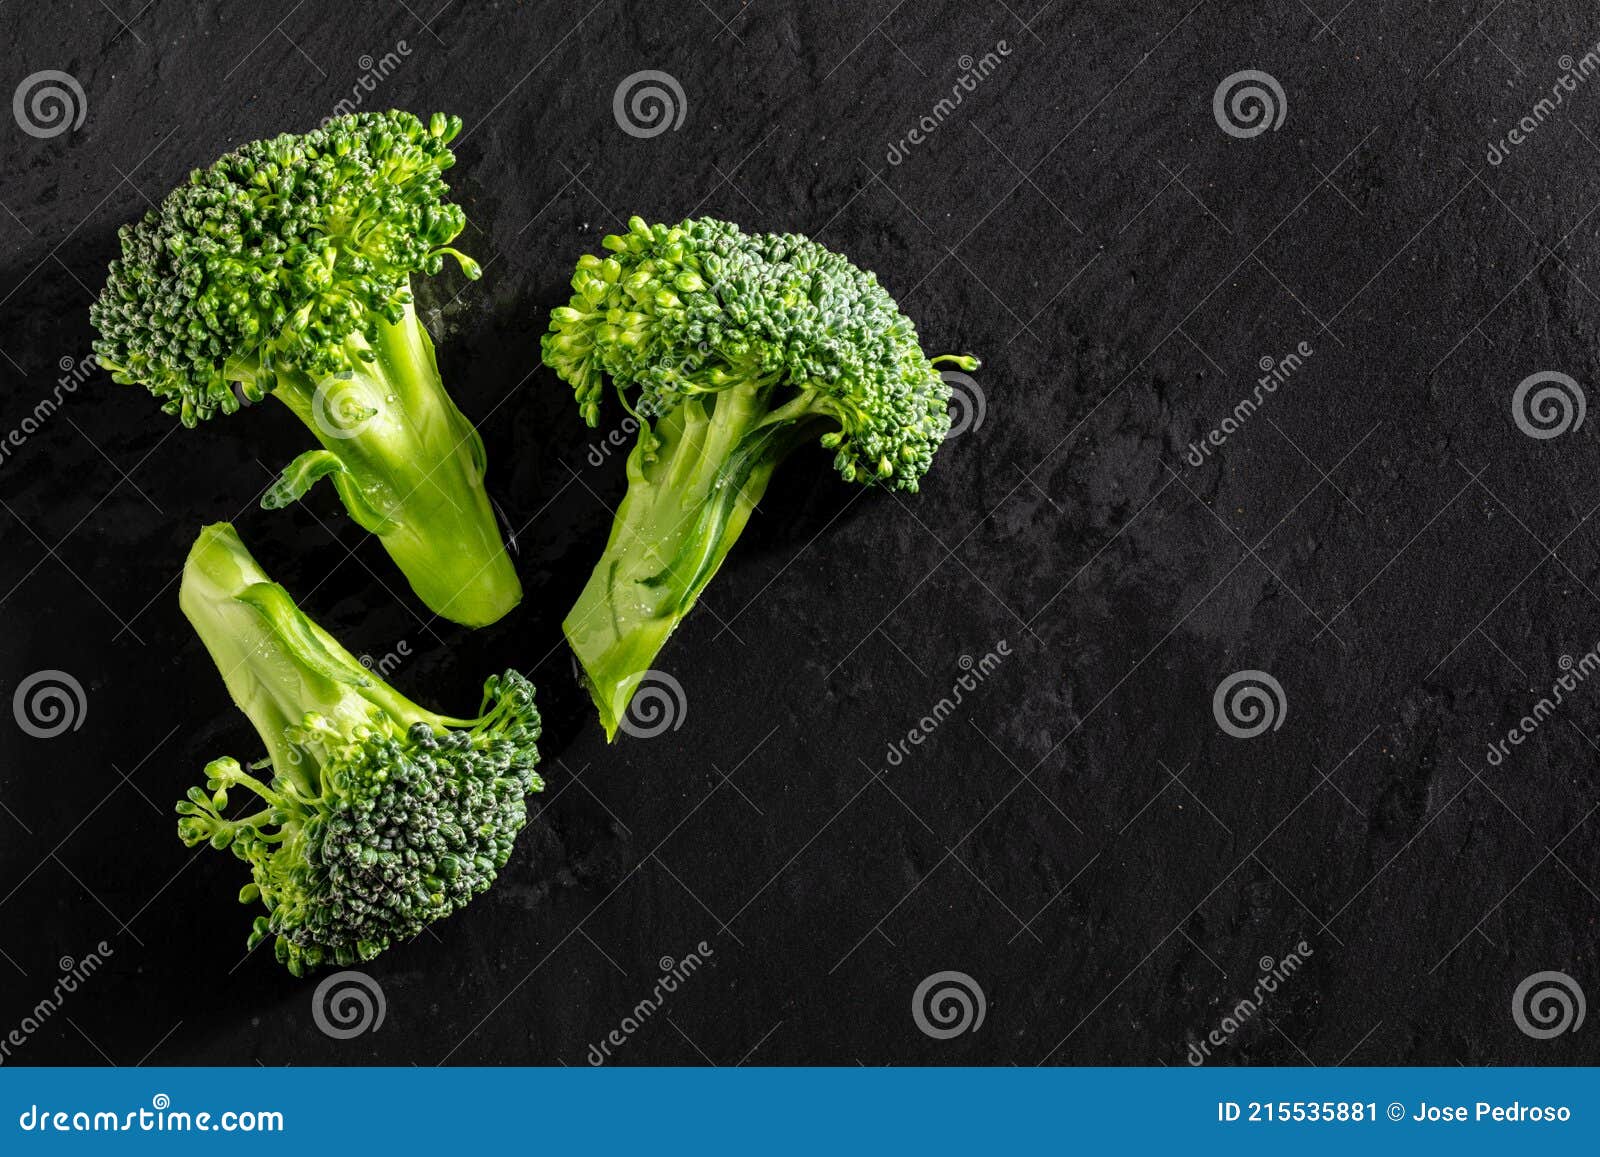 fresh raw broccoli brÃÂ©col, brÃÂ³colli, brÃÂ³qui, broccoli brote, brassica oleracea stalks with water drops on textured slate